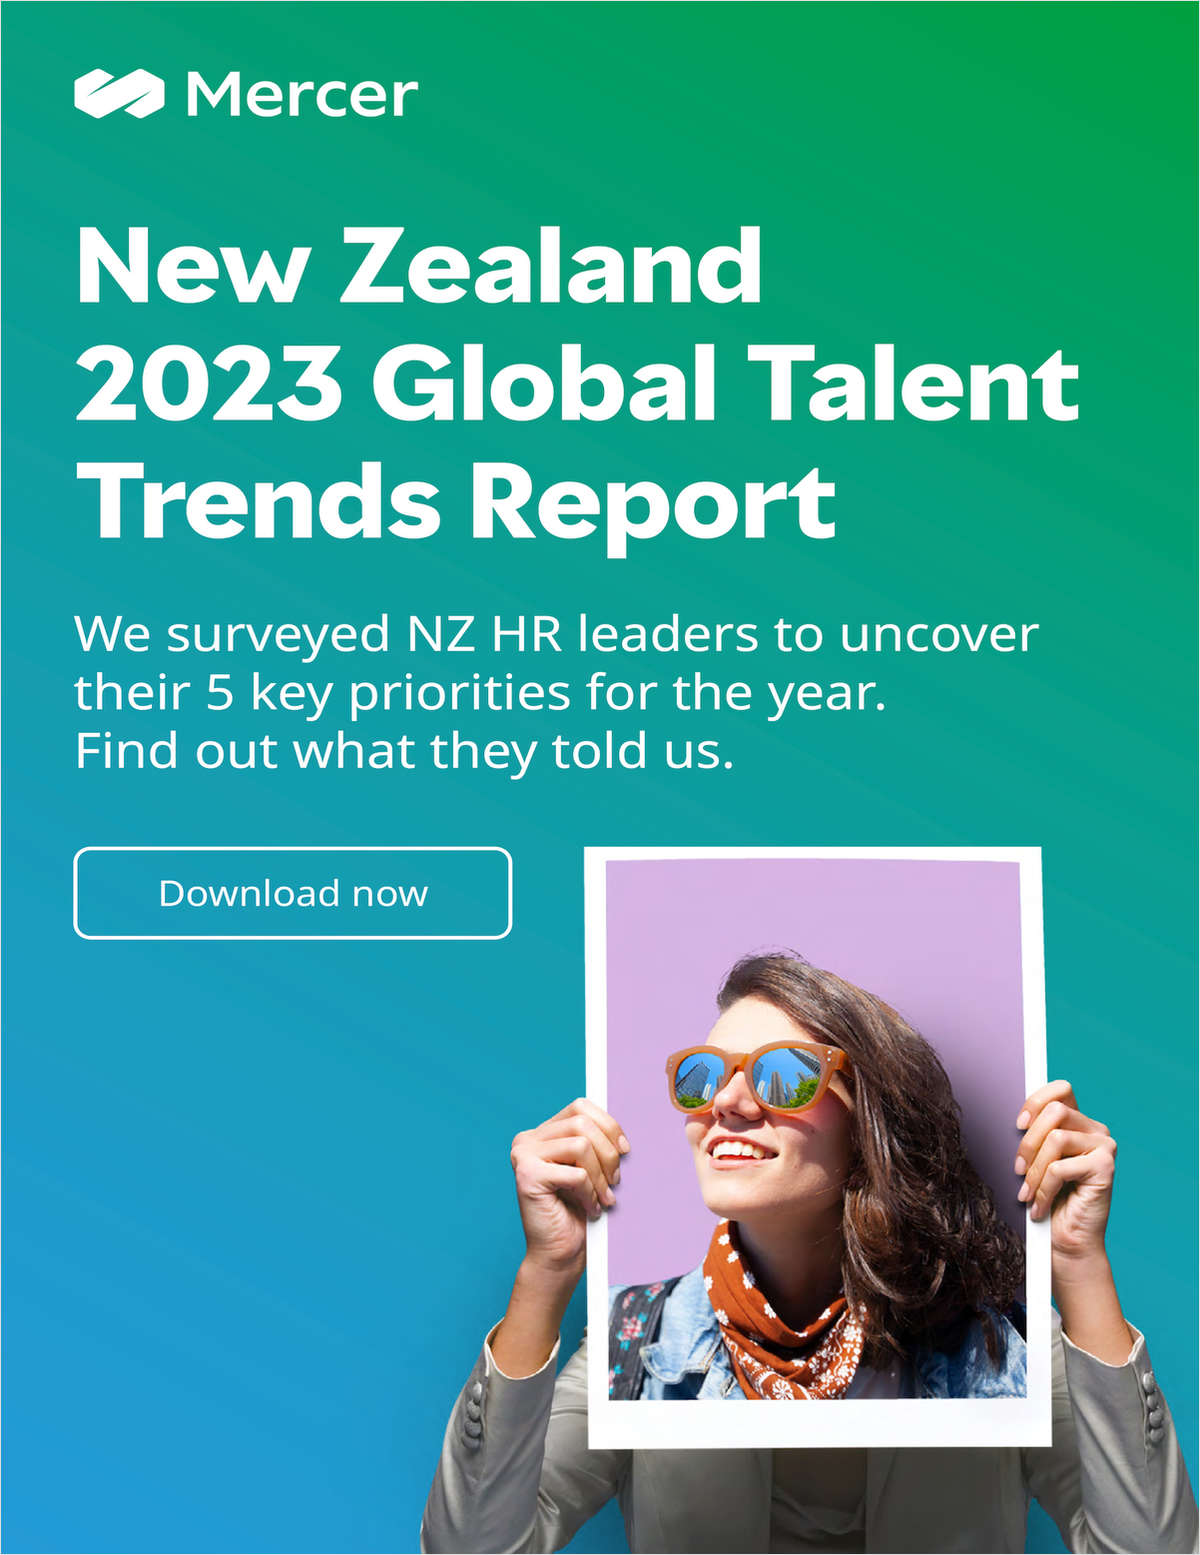 Top Talent Trends of 2023